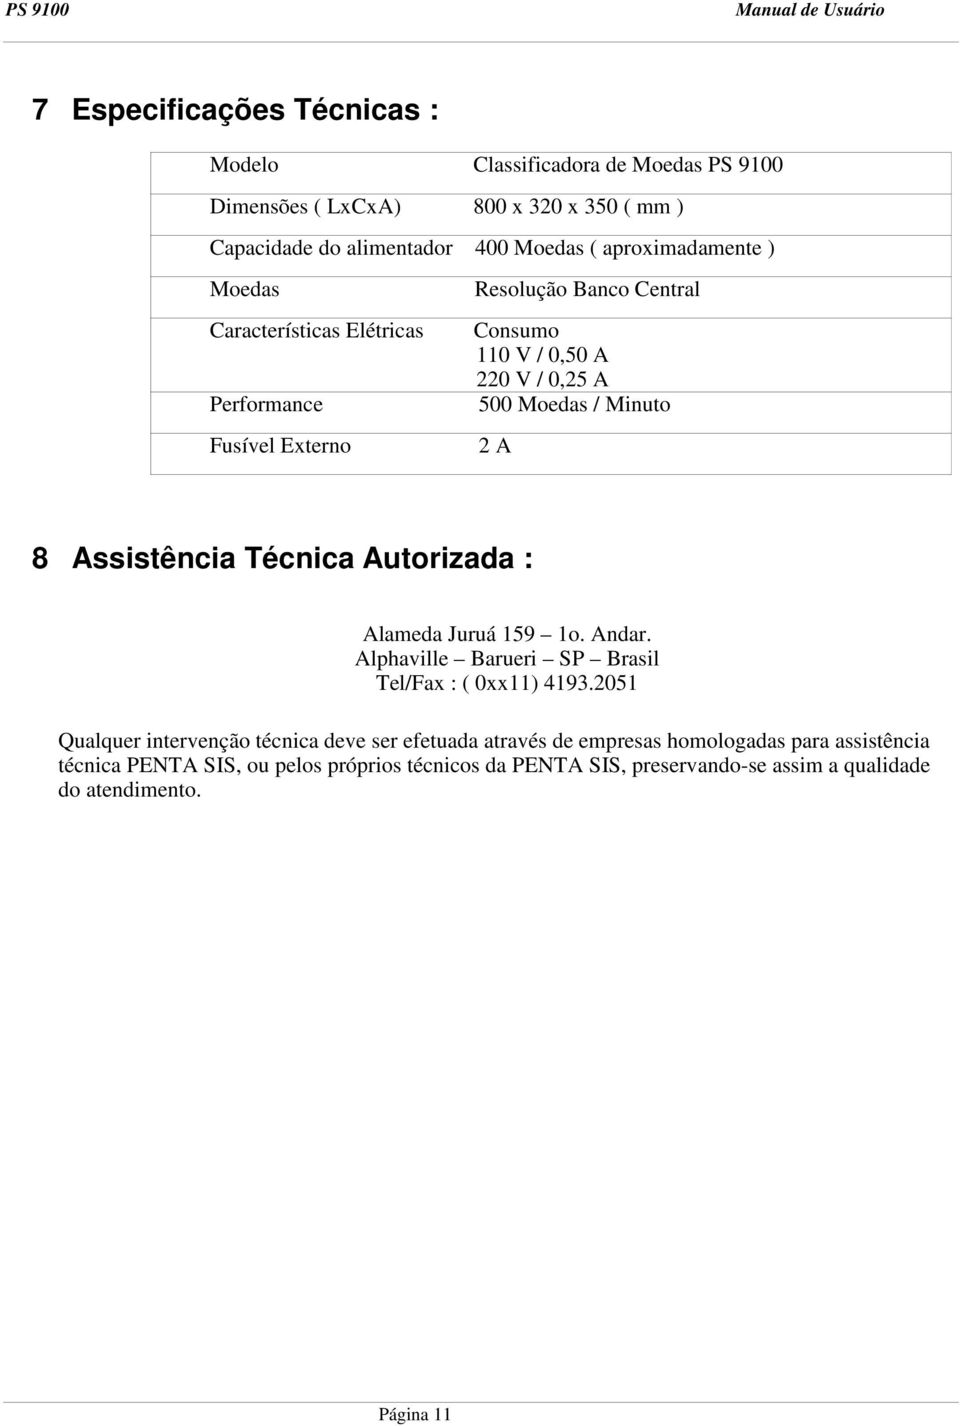 A 8 Assistência Técnica Autorizada : Alameda Juruá 159 1o. Andar. Alphaville Barueri SP Brasil Tel/Fax : ( 0xx11) 4193.